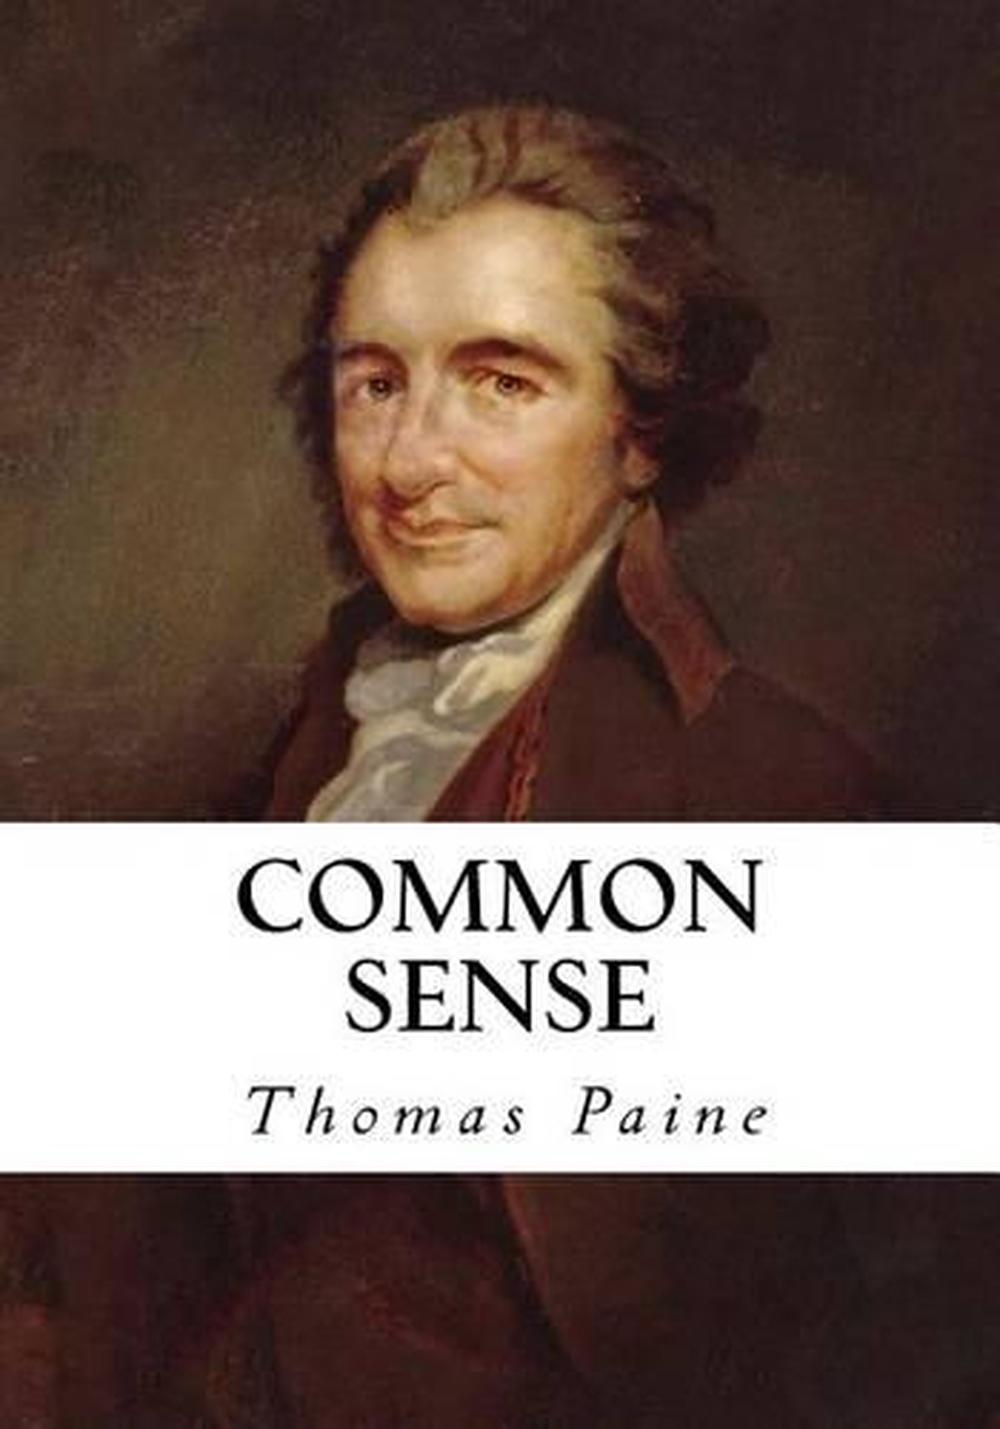 thomas paine and common sense